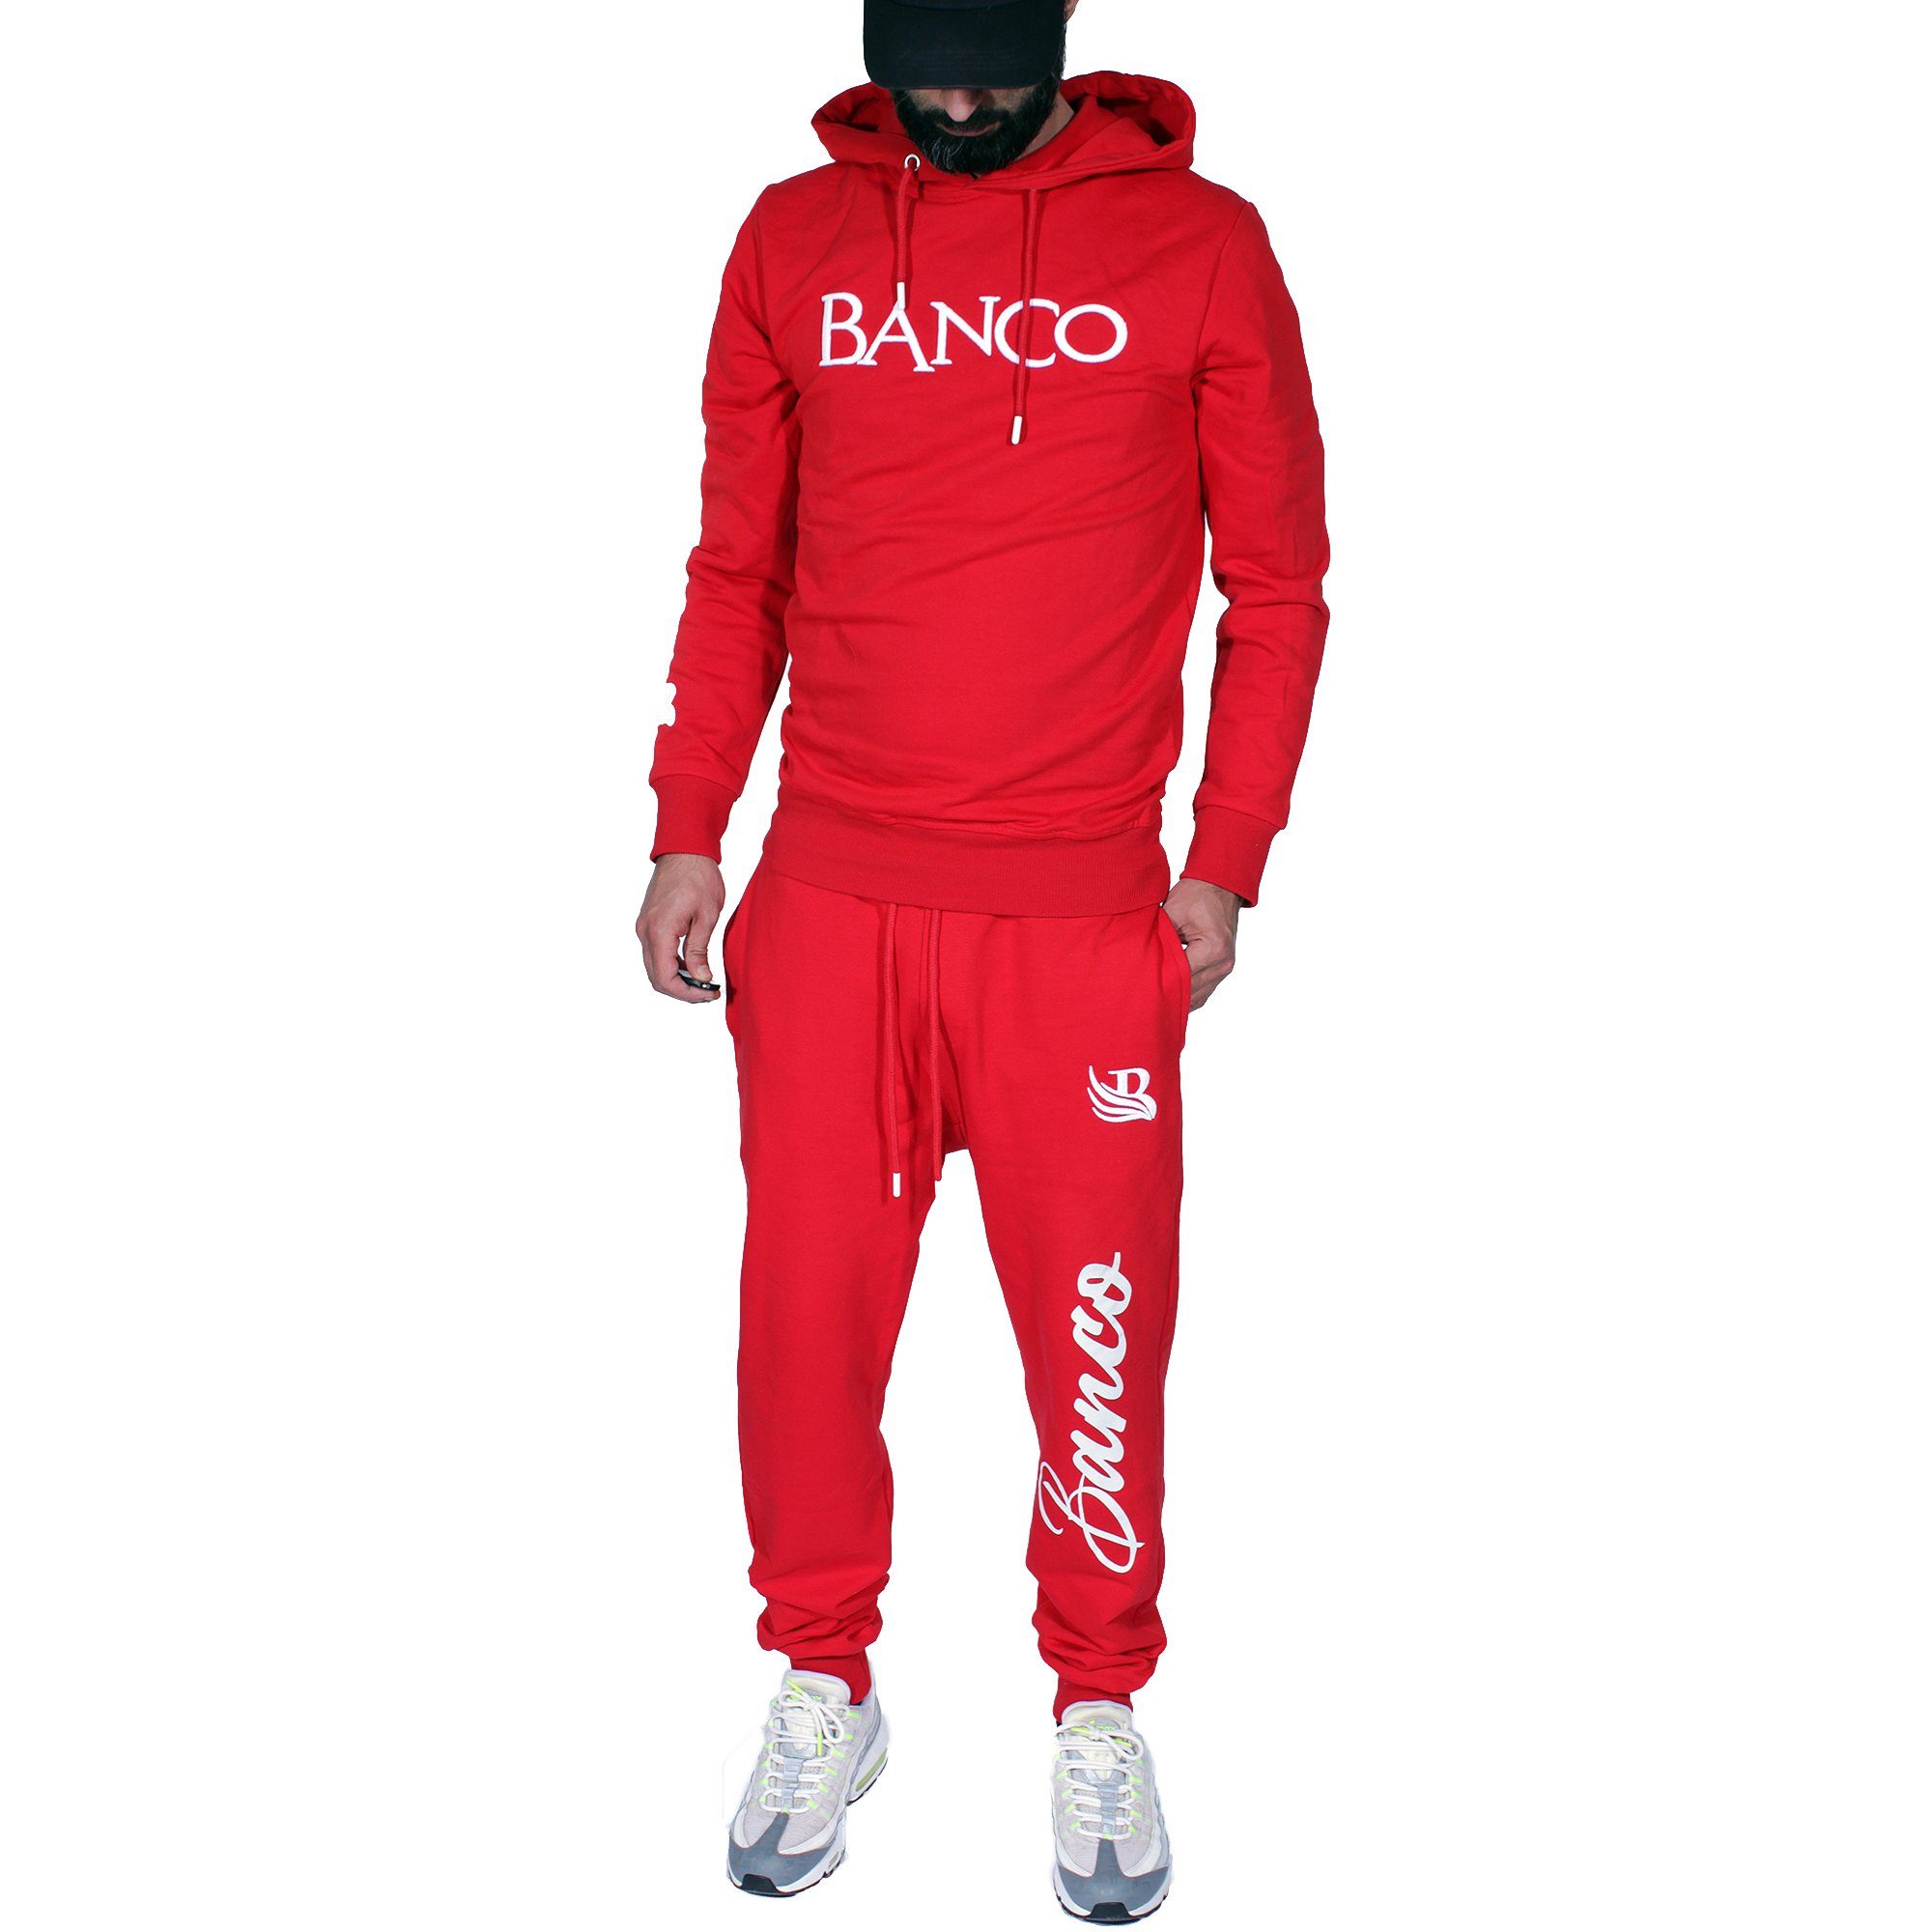 Banco Freizeitanzug Banco Sportanzug mit Rot Herren, Logo Mit Kapuze Outdoor Fitness Streetwear